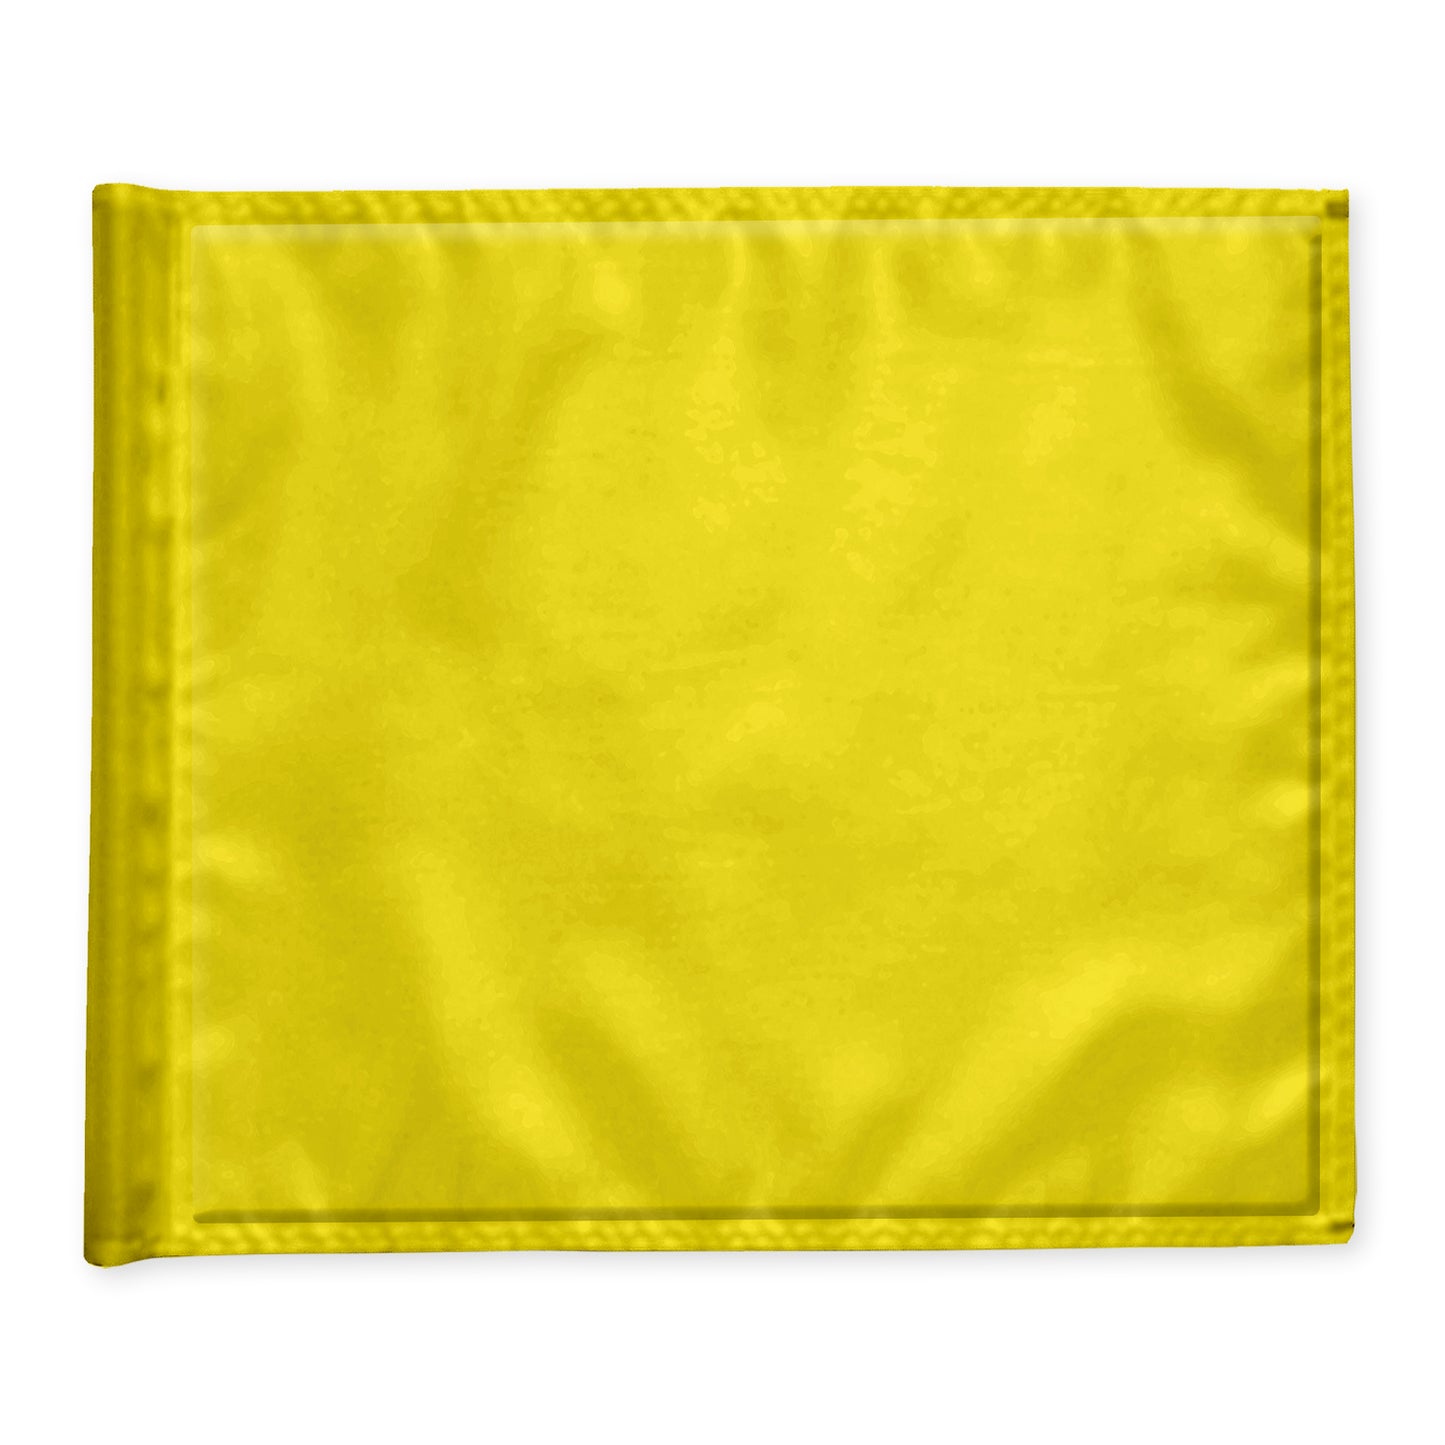 X-large yellow flag